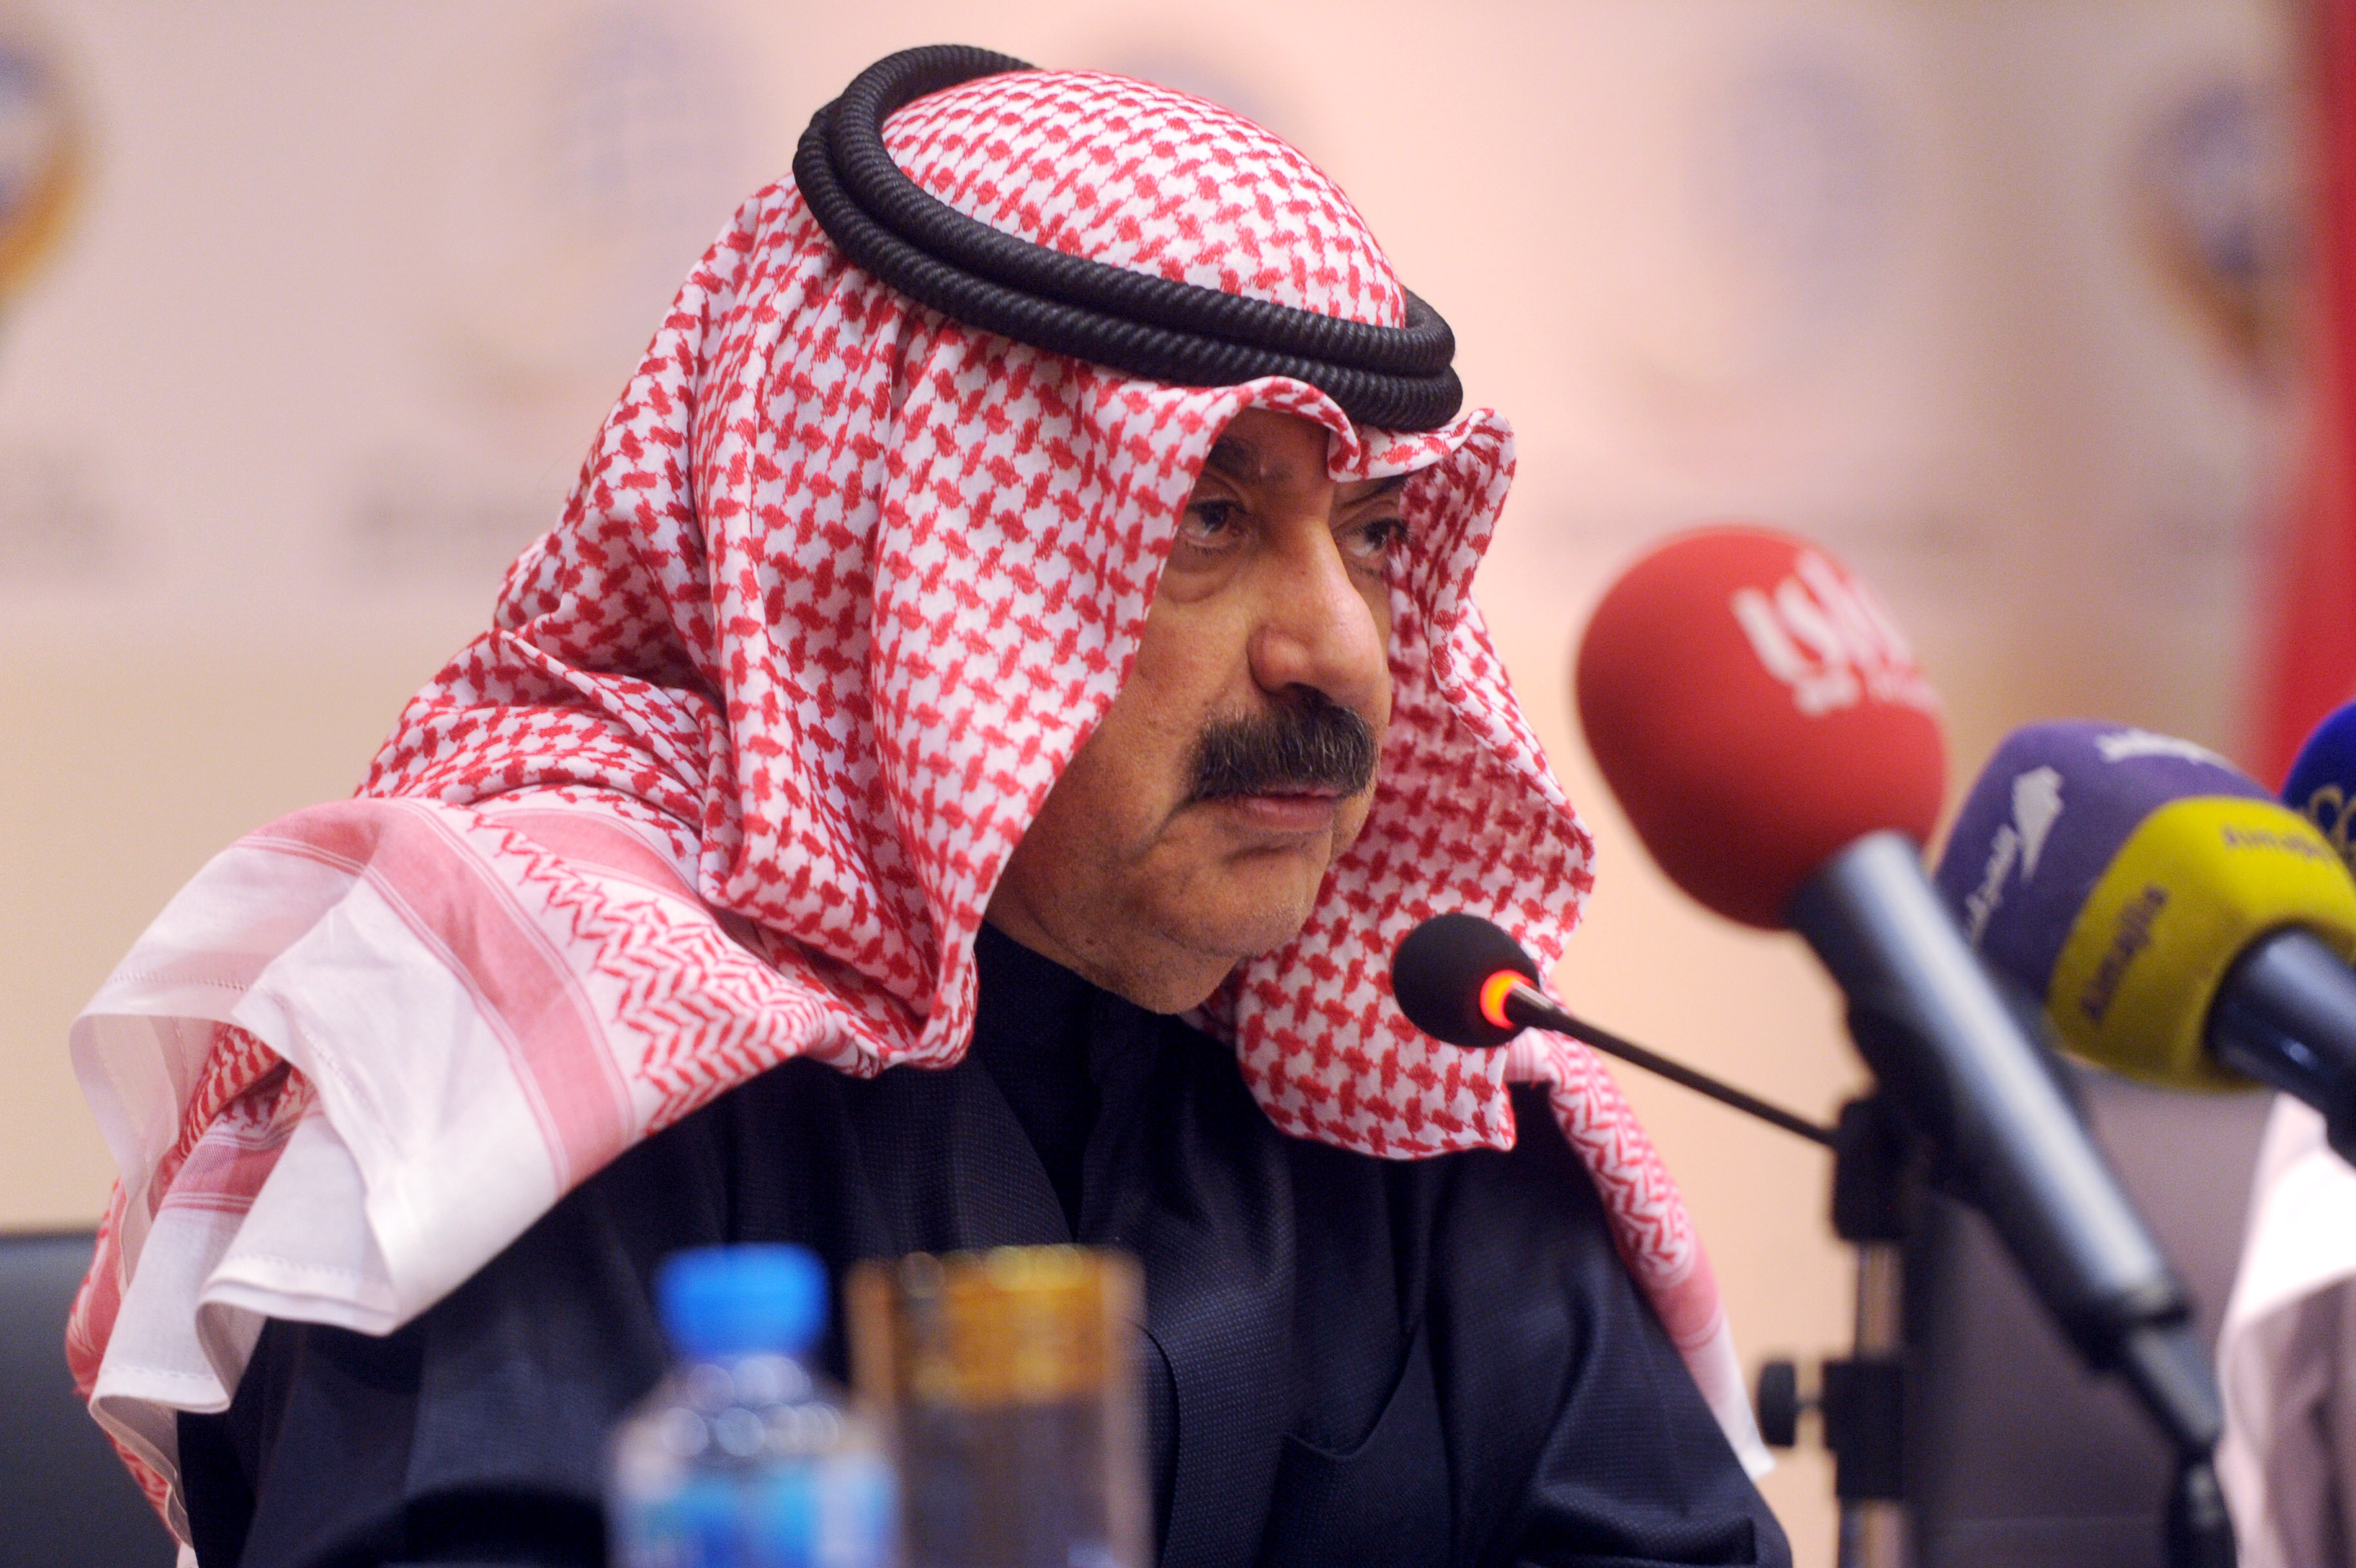 Deputy Foreign Minister Khaled Al-Jarallah